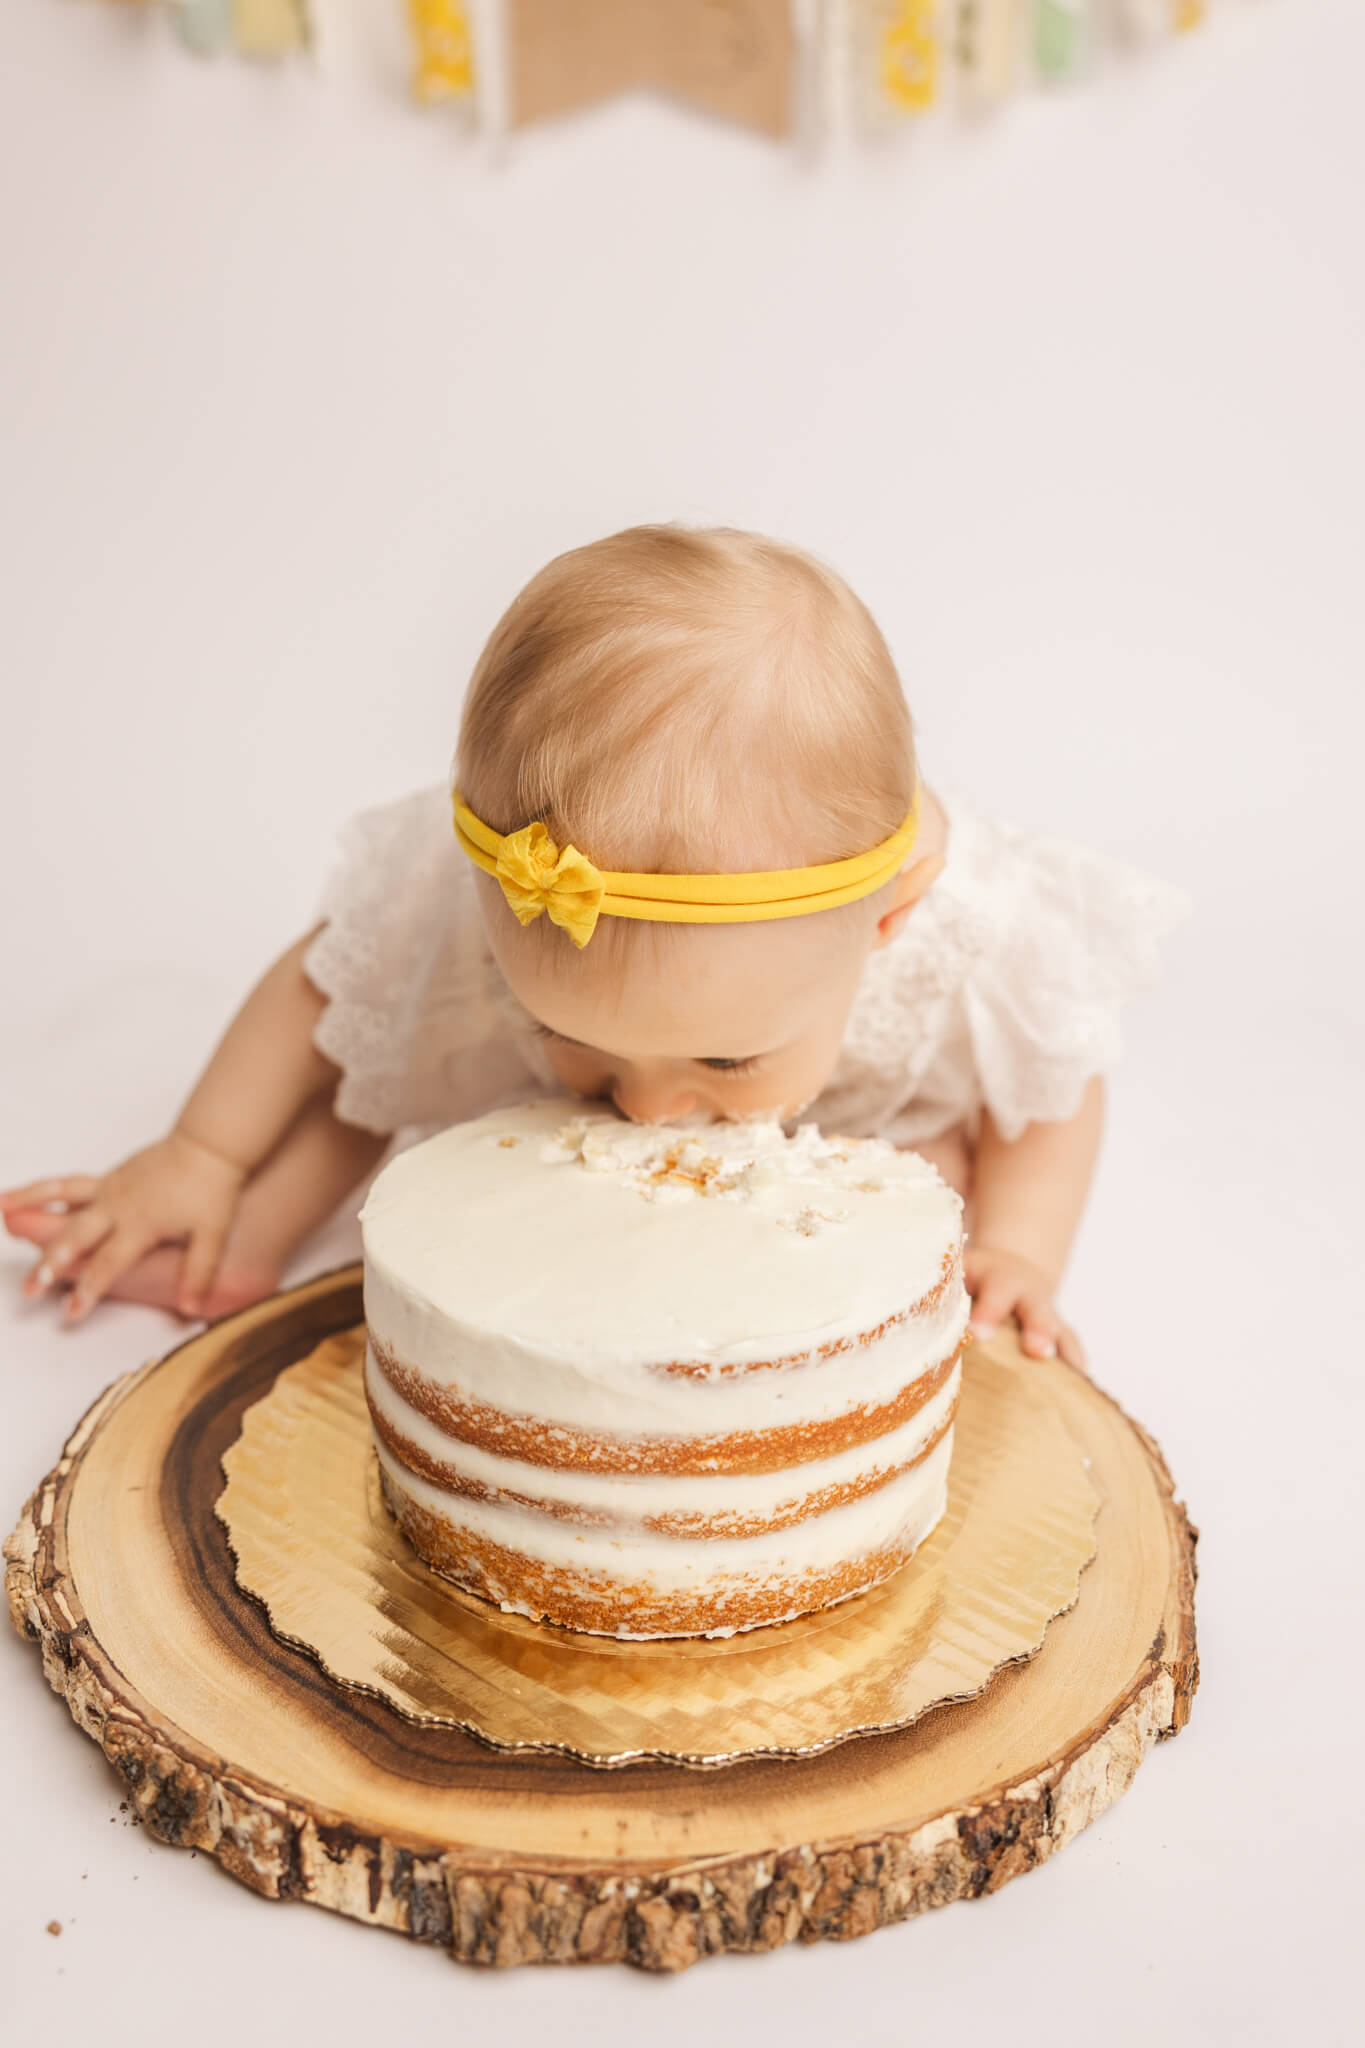 Baby girl enjoying her vanilla cake during her cake smash session.